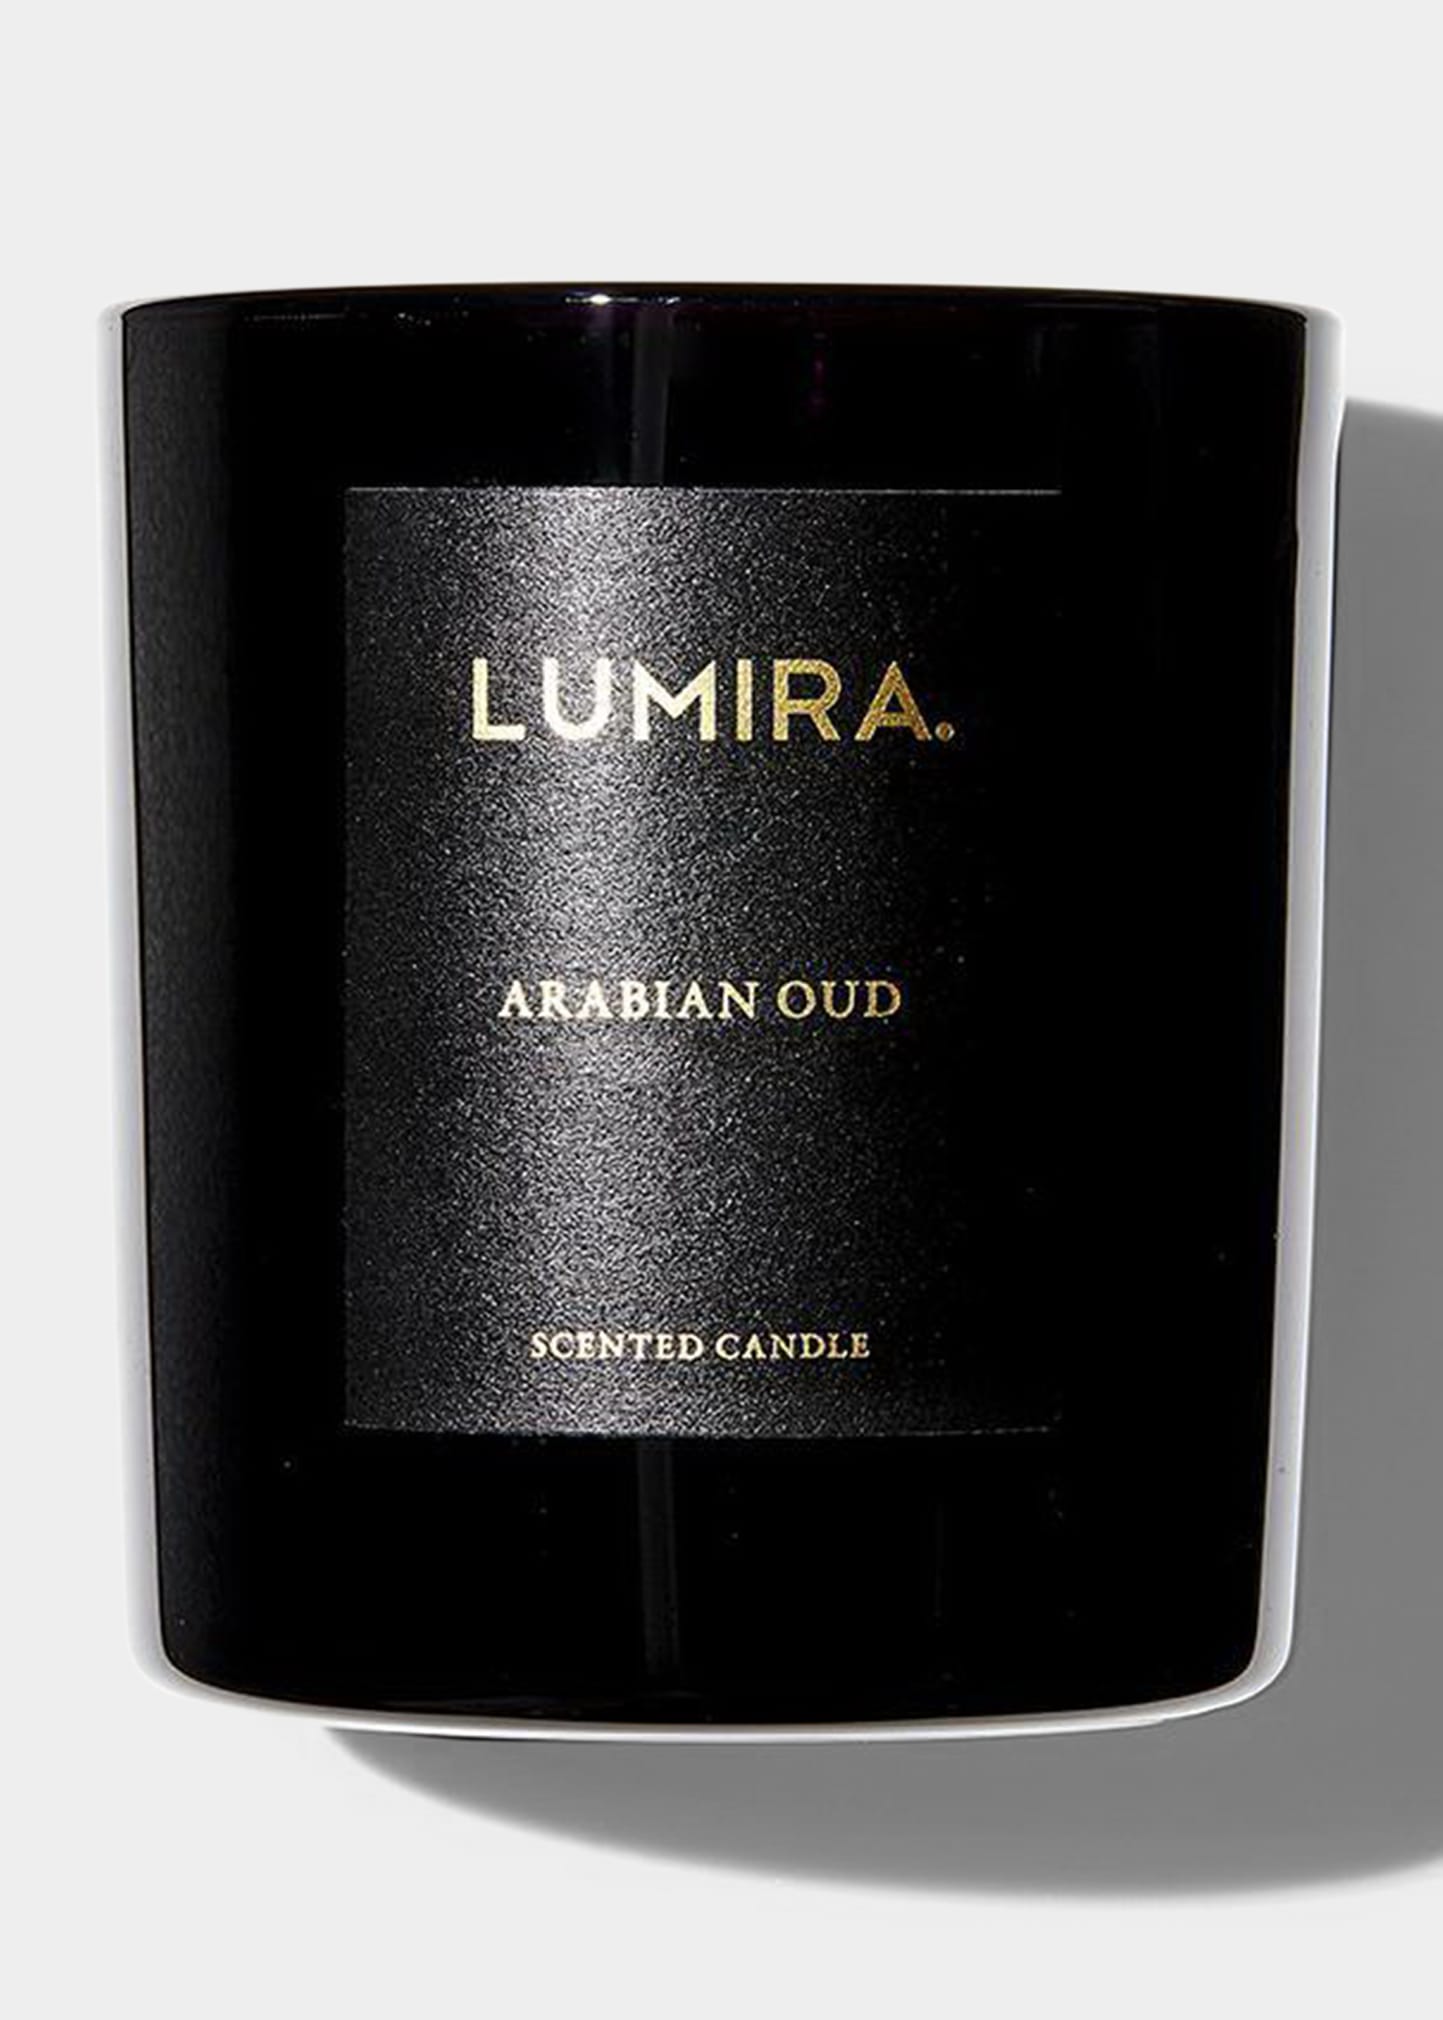 Lumira Arabian Oud Black Scented Candle, 10.6 Oz.